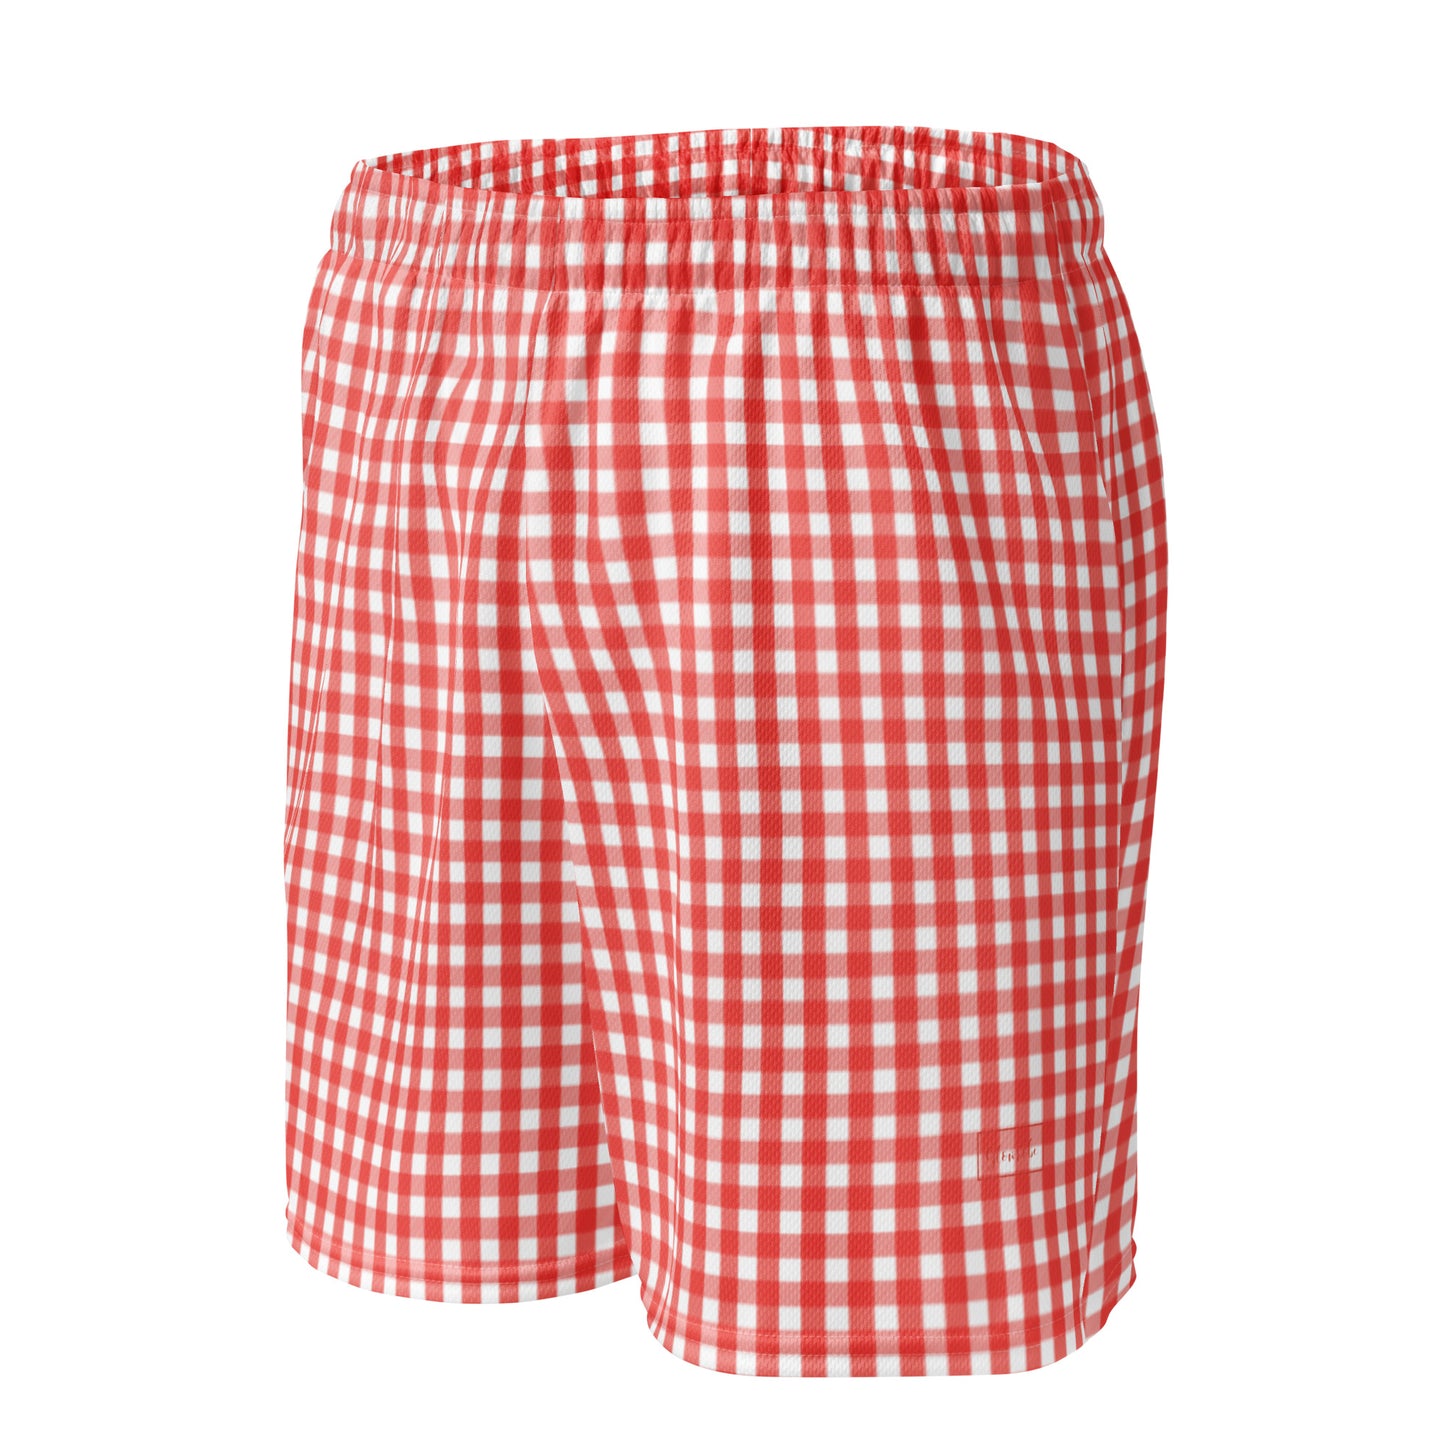 Candy Checkered Mesh Shorts